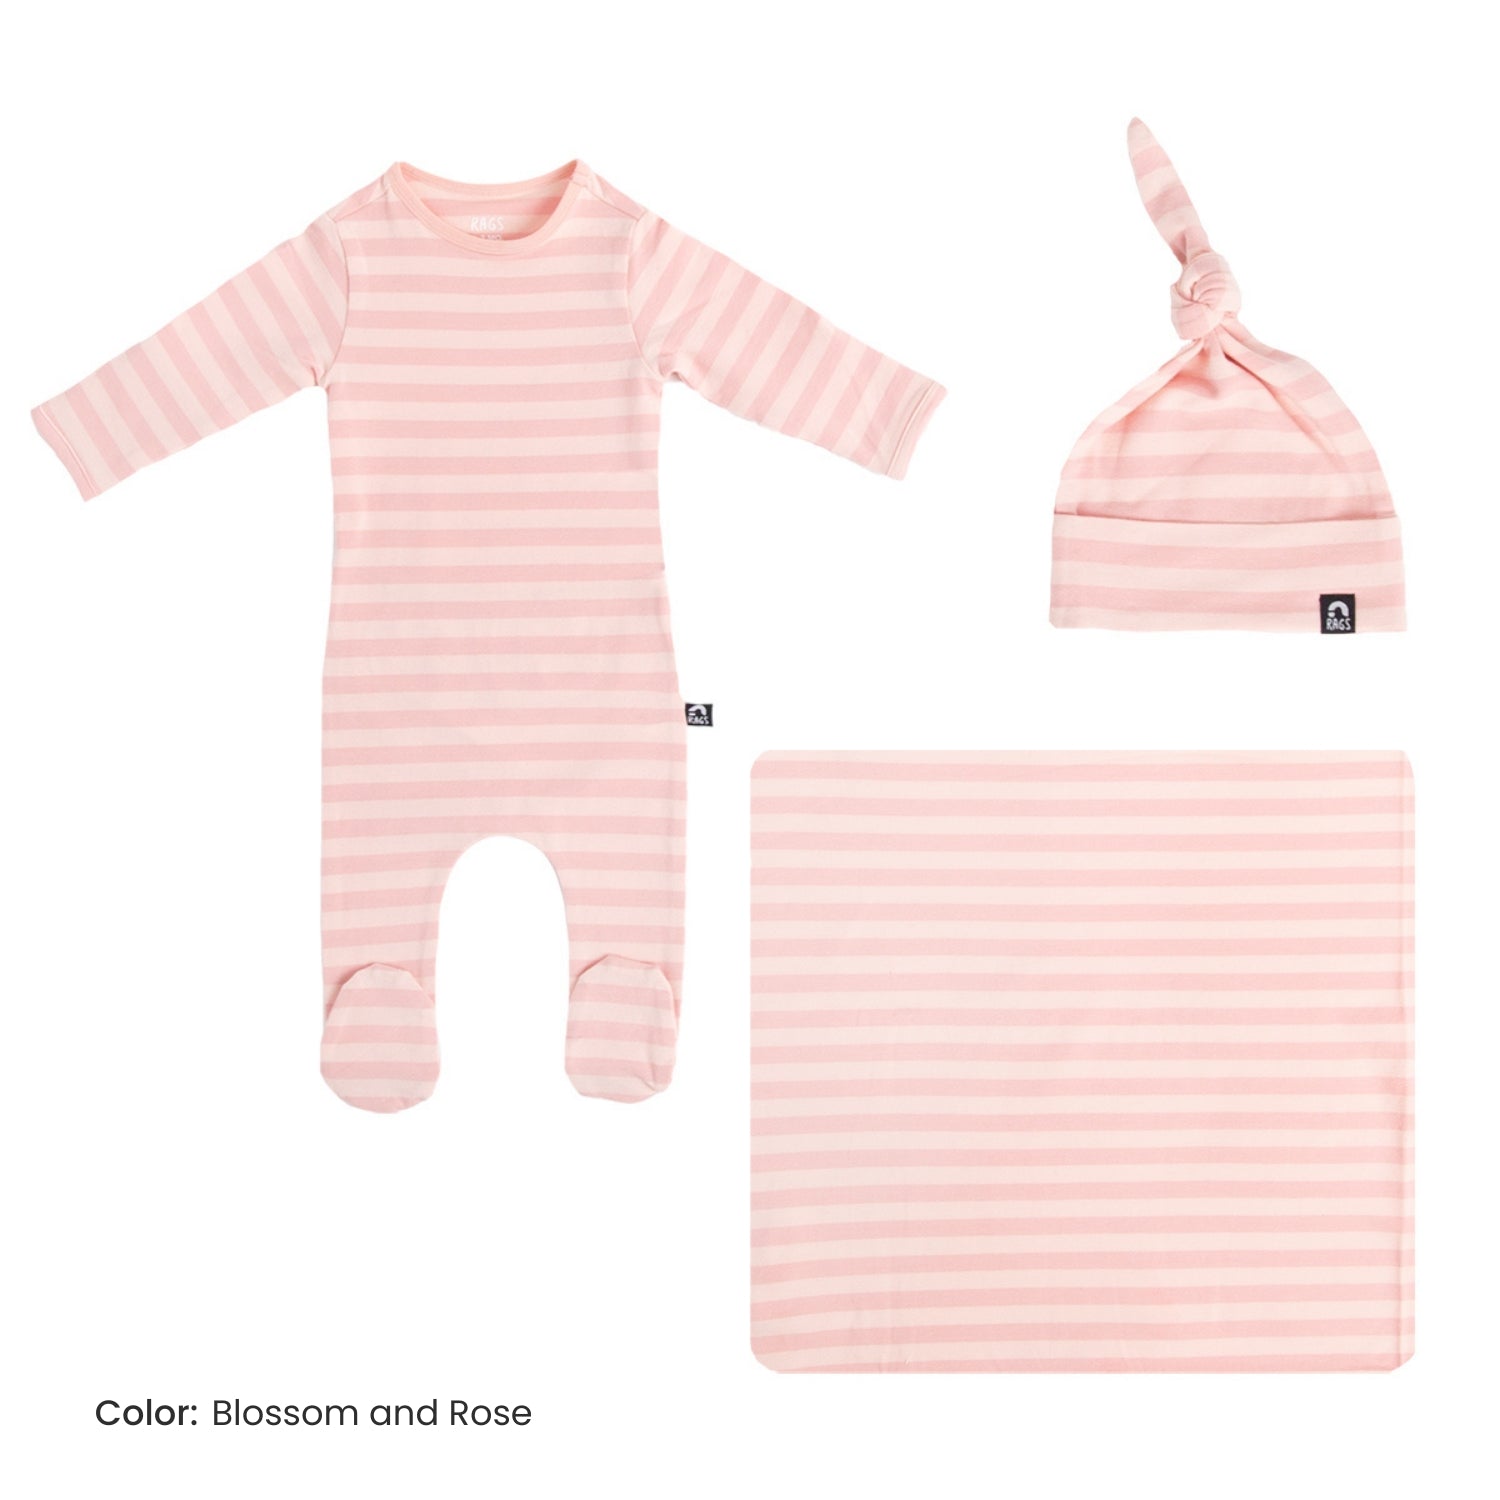 RAGS Newborn Gift Bundle - Blossom Stripe